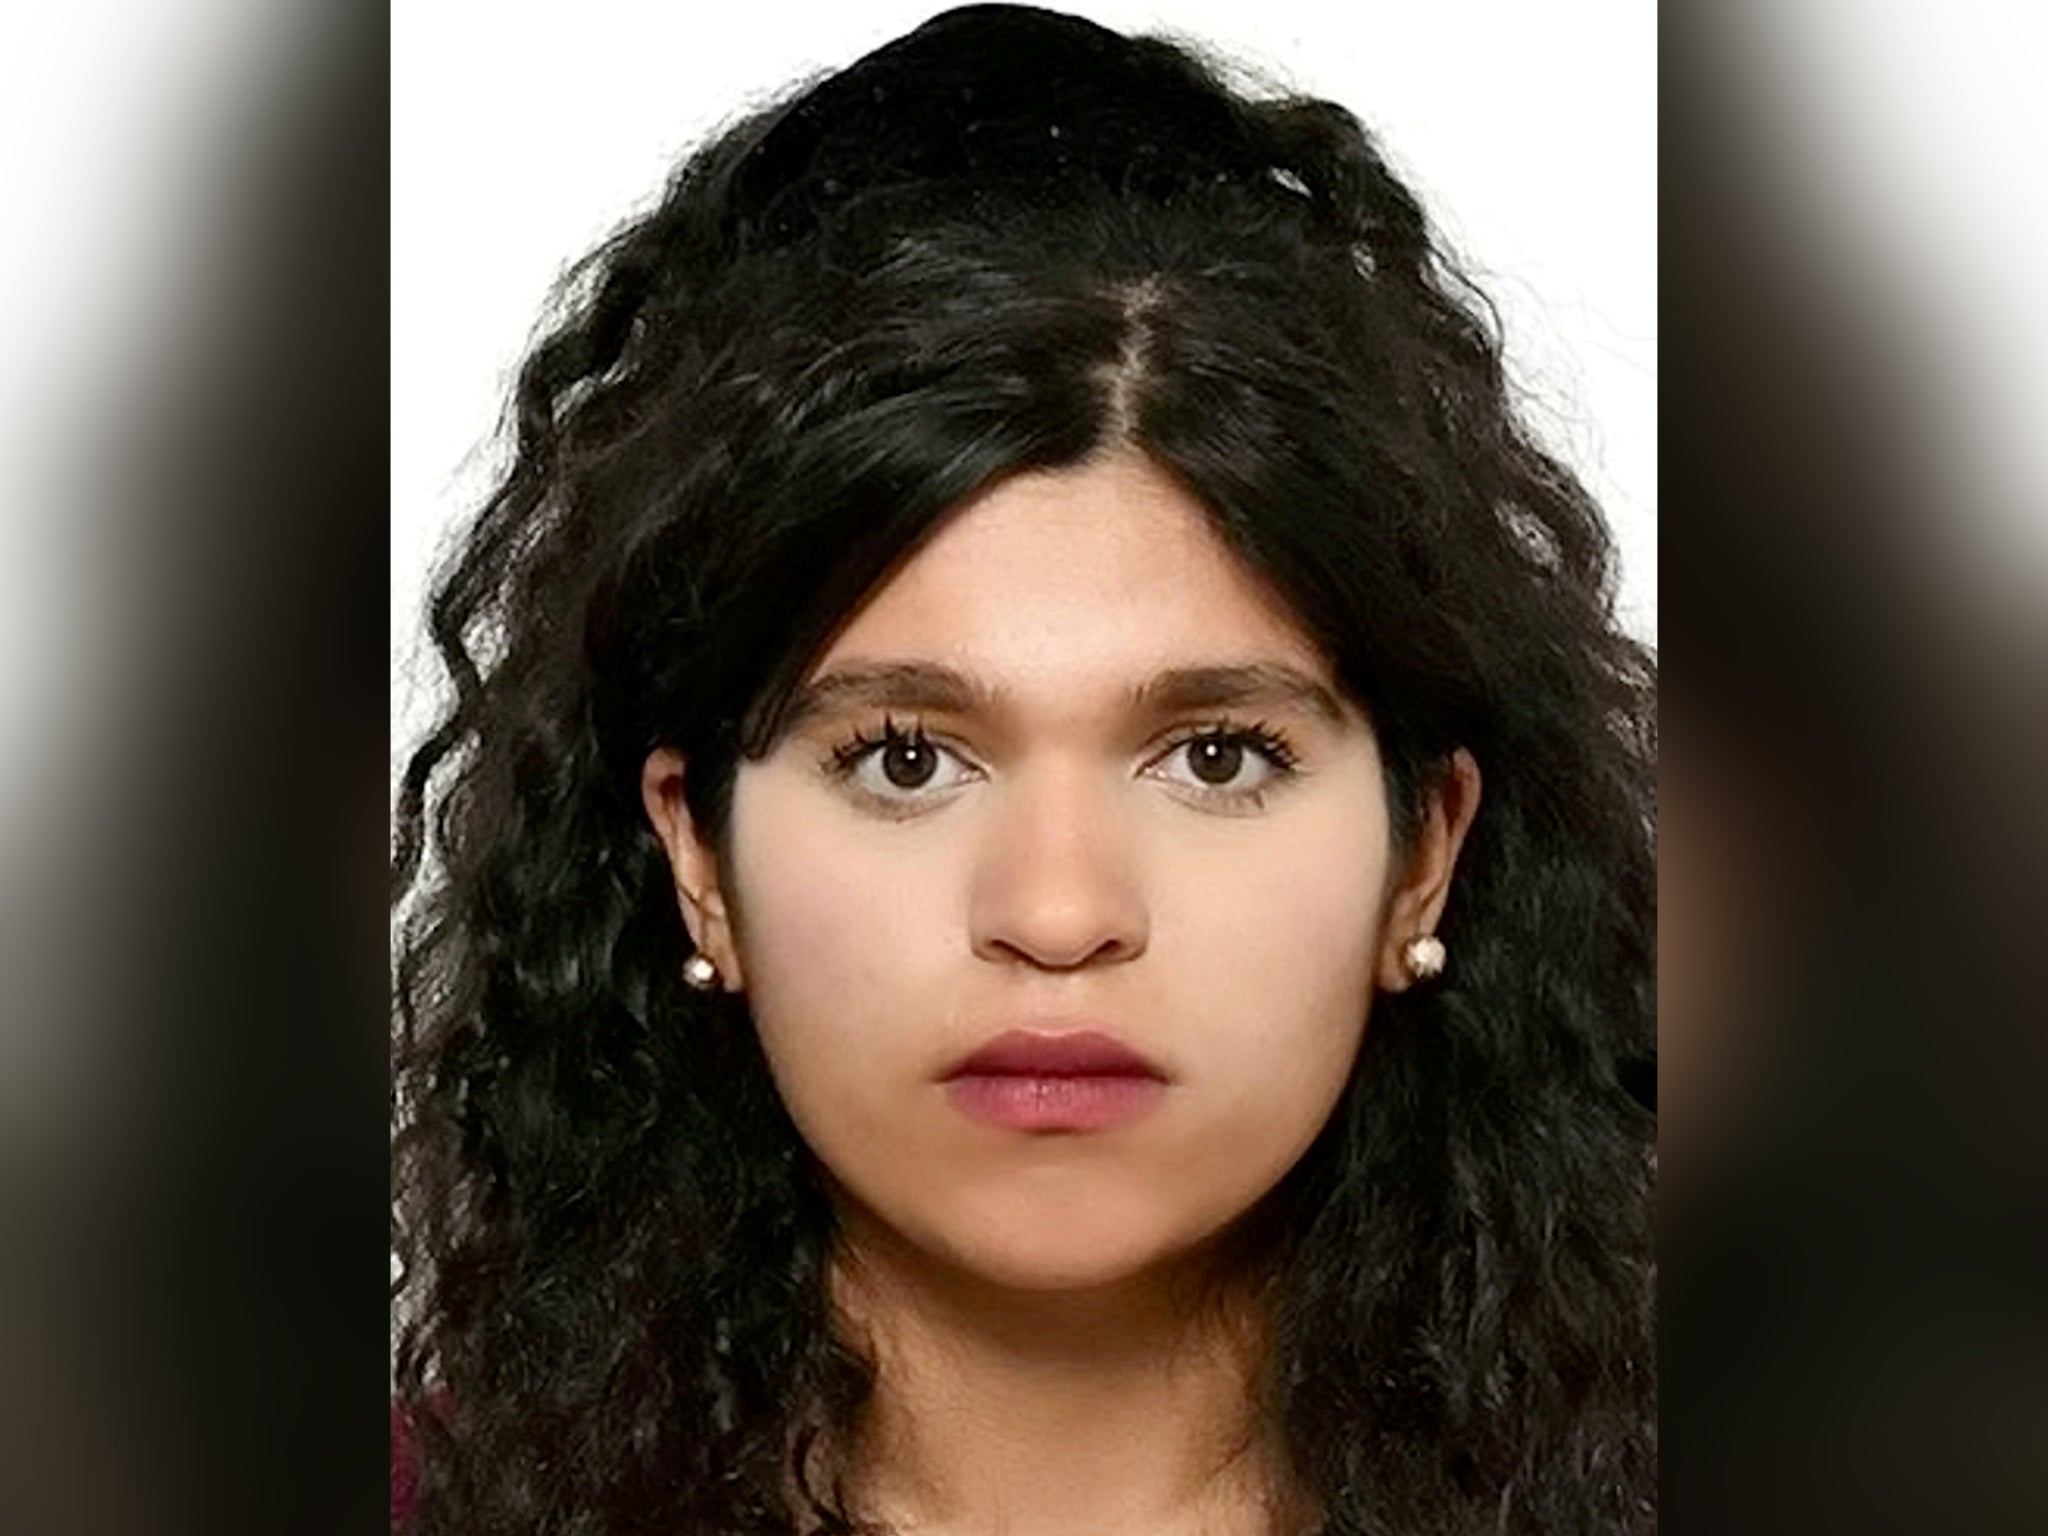 Sabita Thanwani was found dead in her student halls on Saturday in Clerkenwell